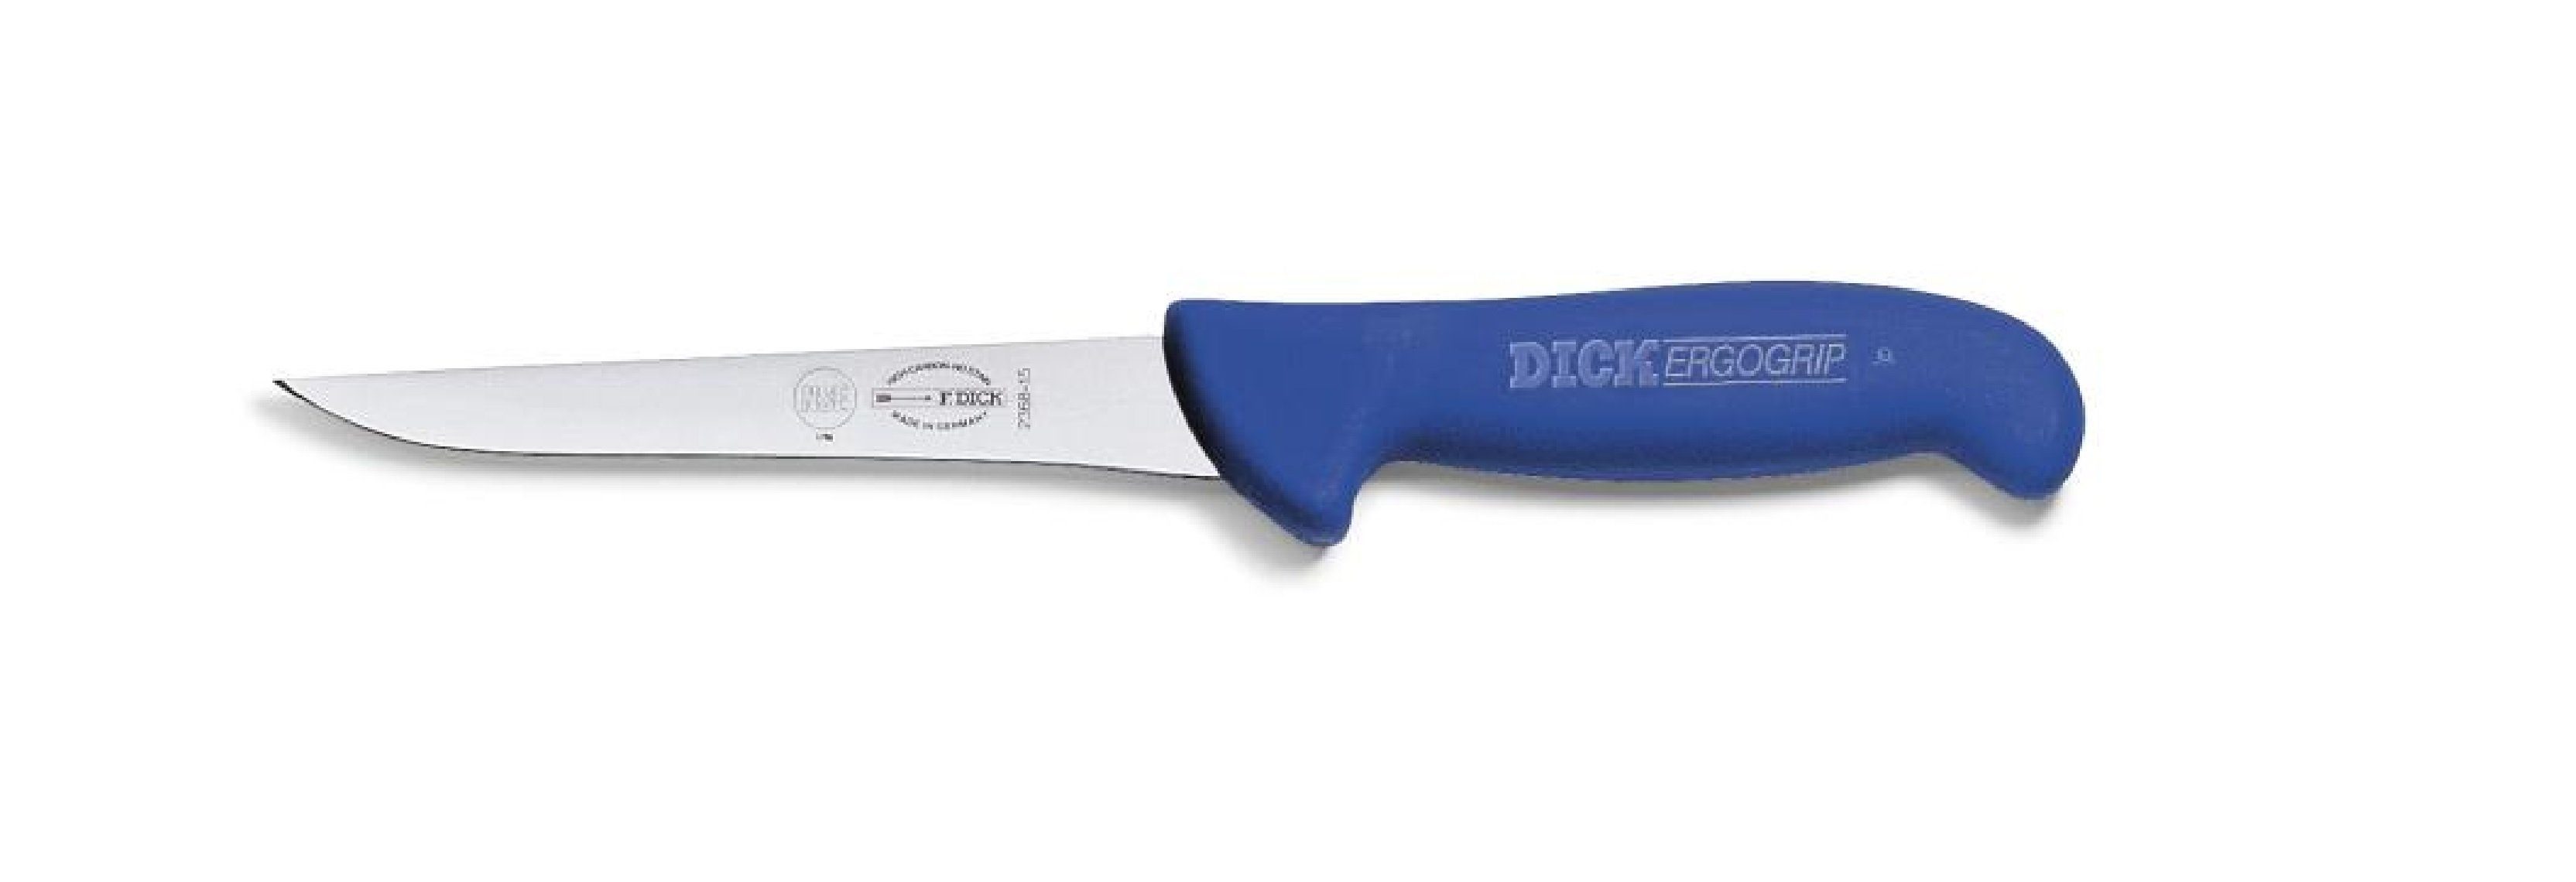 Dick Ausbeinmesser Dick Ausbeinmesser Ergogrip Messer schmale 15 cm Klinge 8236815